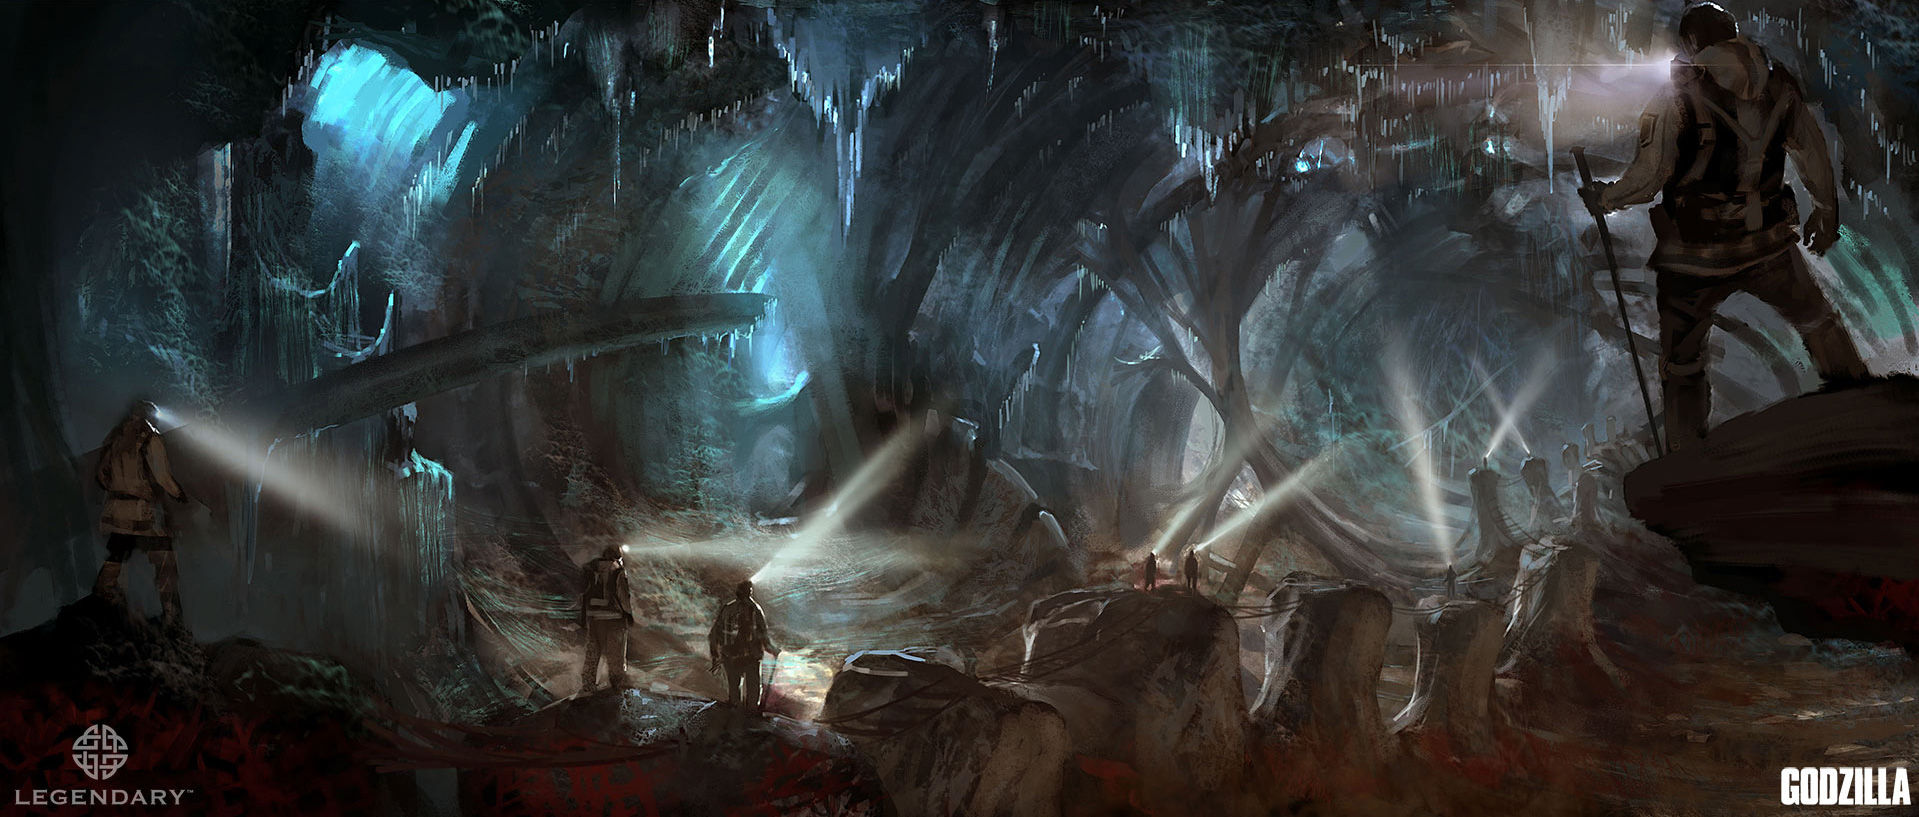 Godzilla_Concept_Art_Kan-Muftic_04_Cave